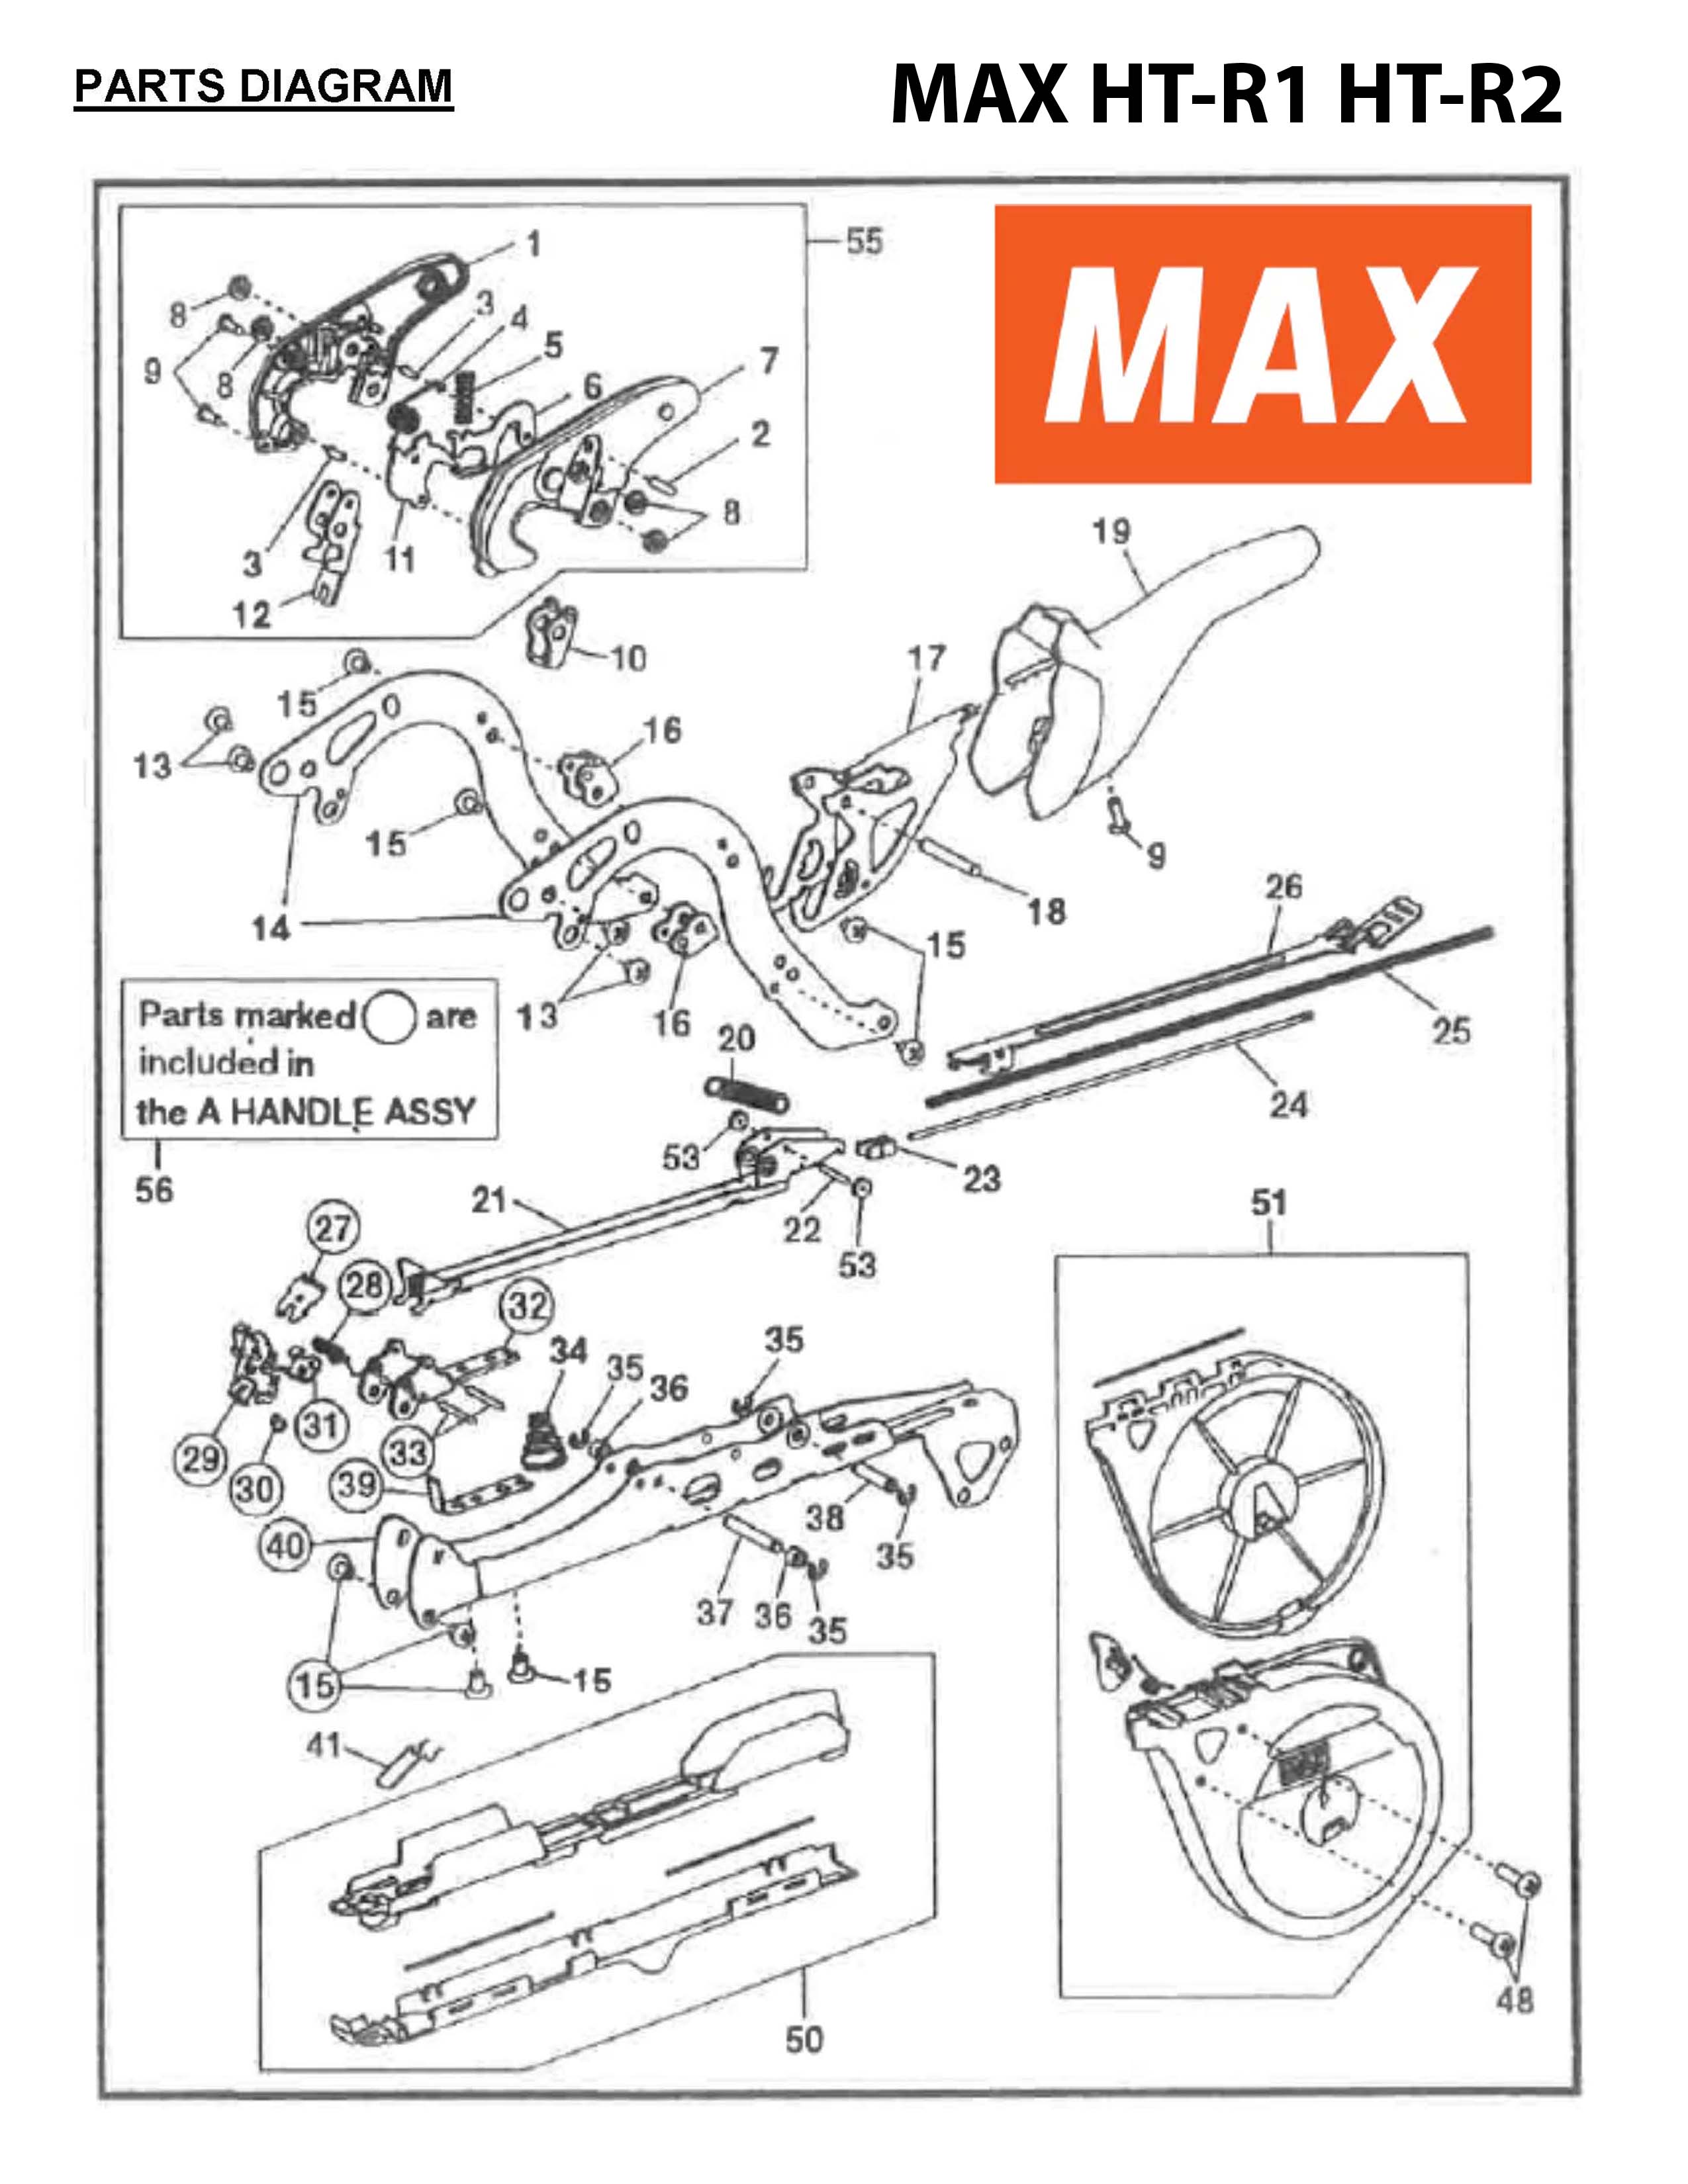 MAX Tapener Part JJ10103 E-RING 3.2 Fits MAX HT-R1 HT-R2 #35